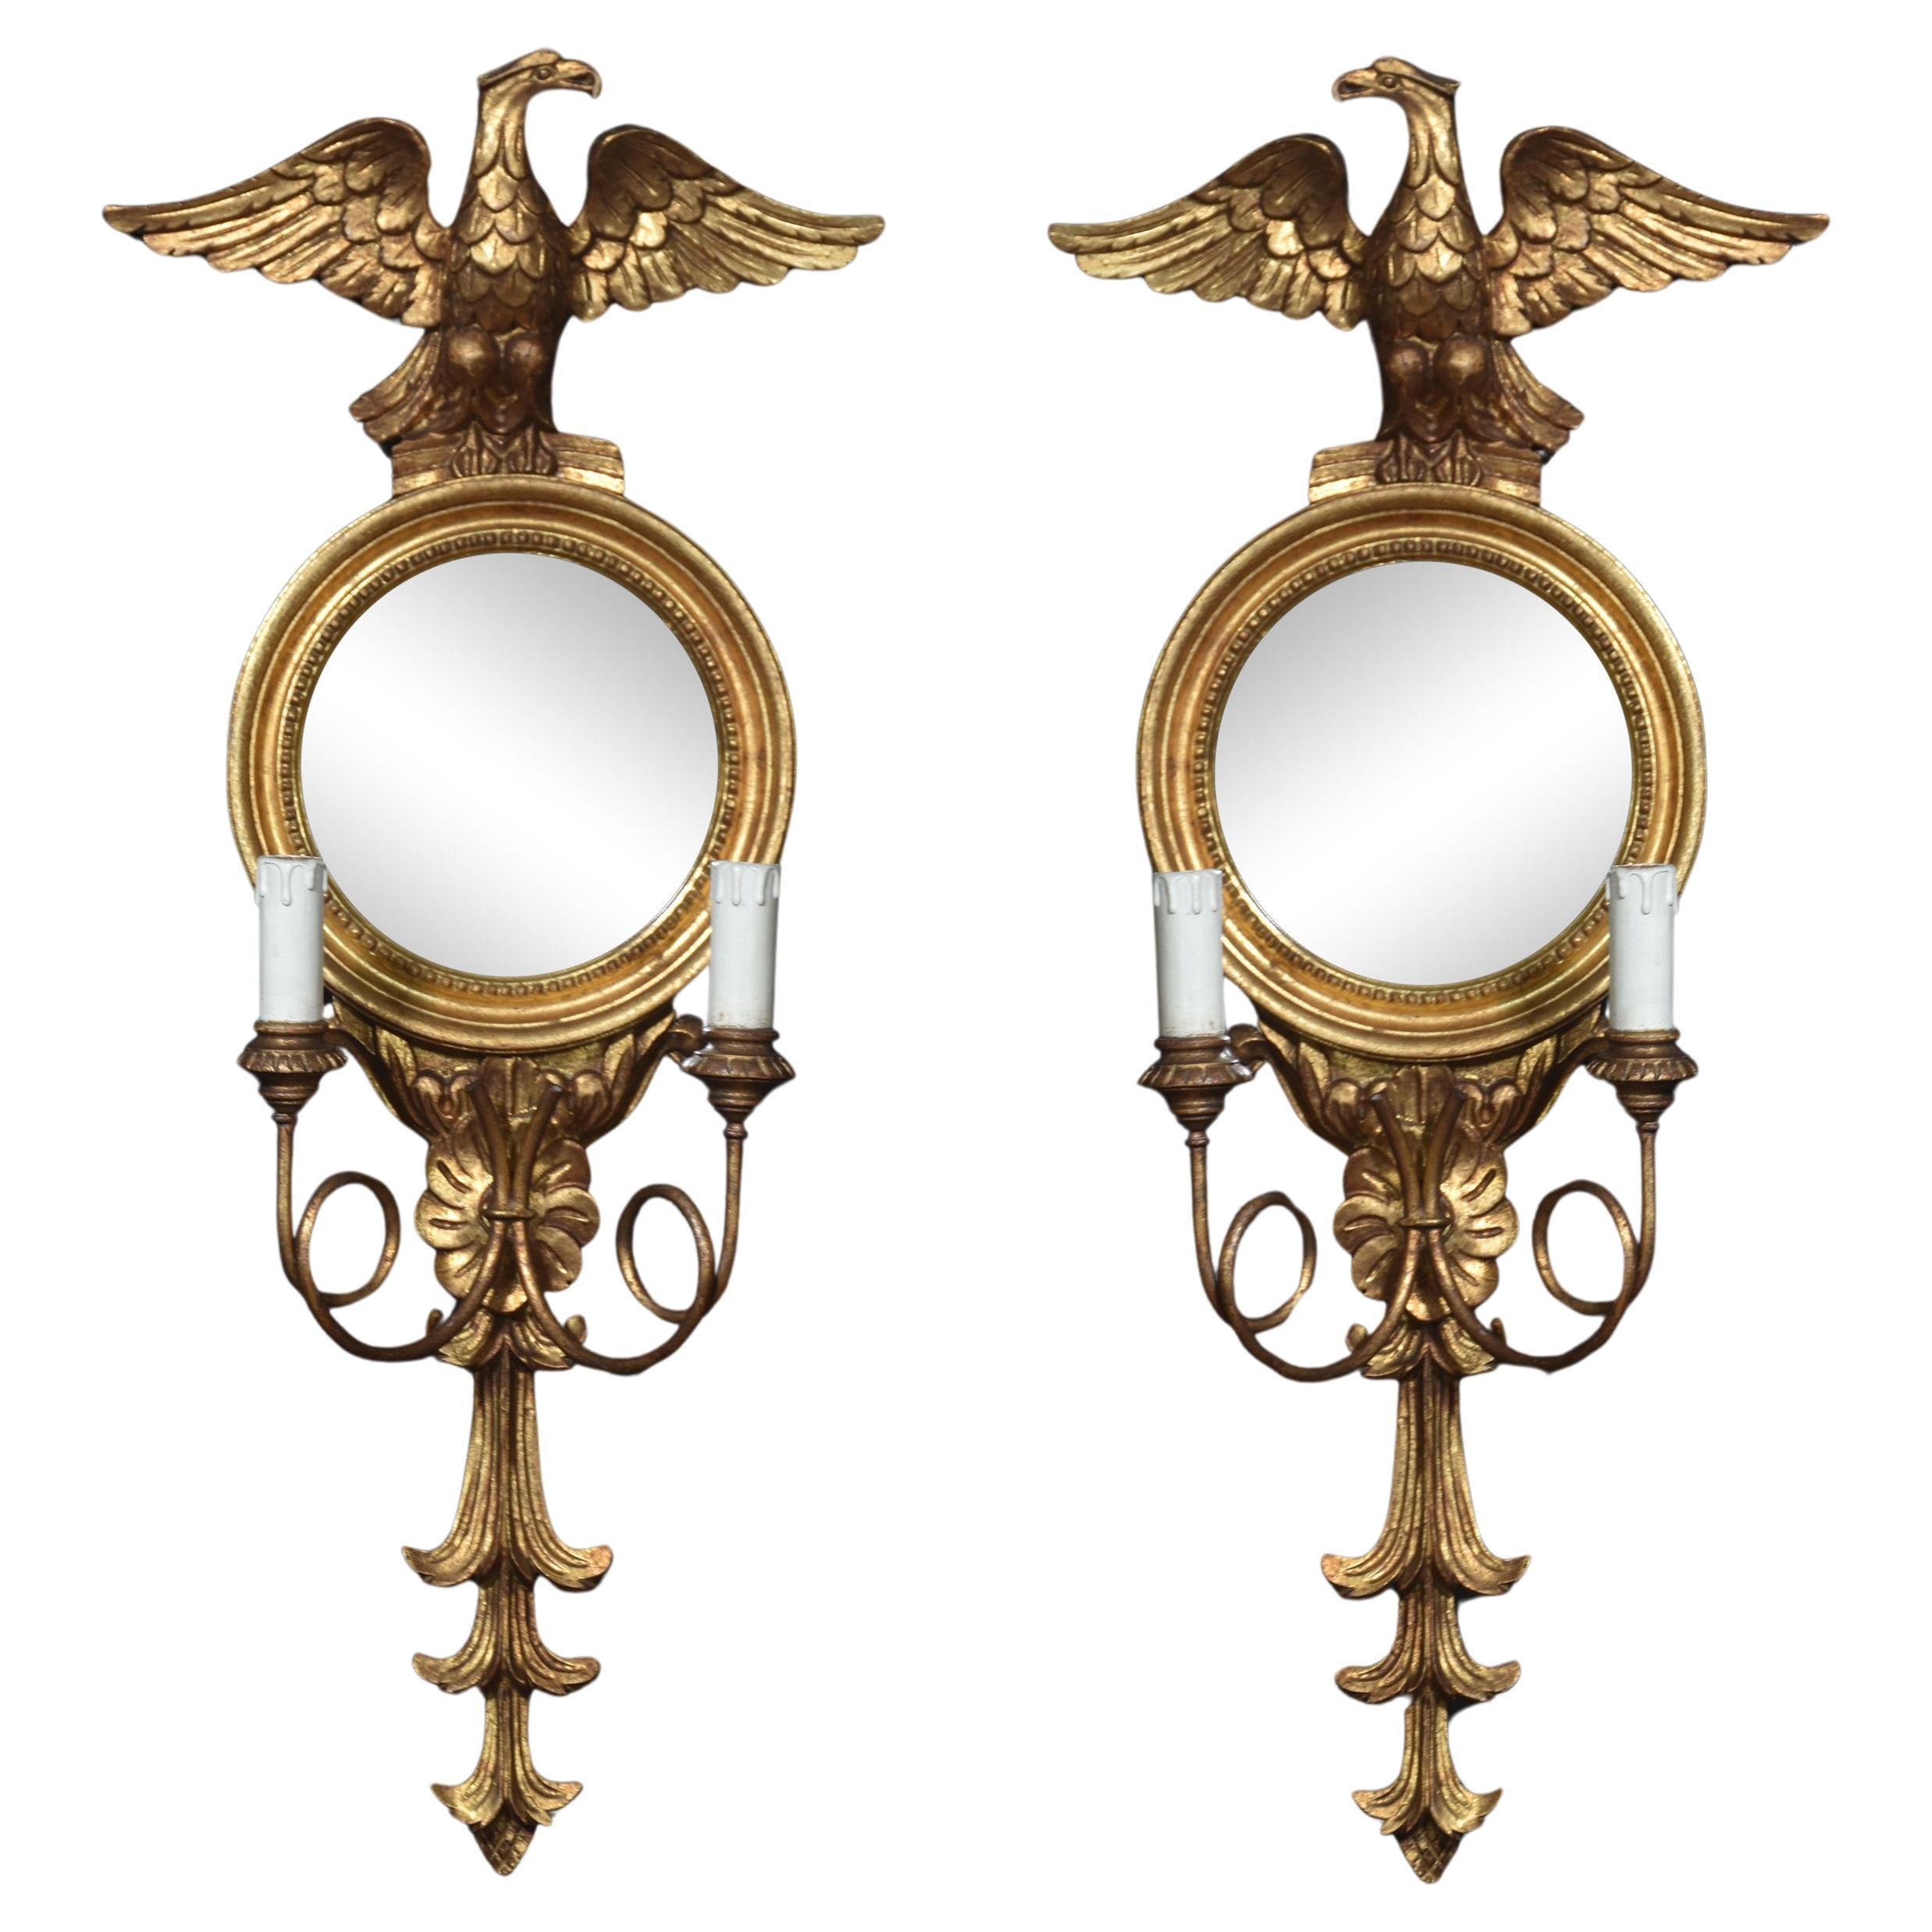 Pair of Regency style wall mirrors